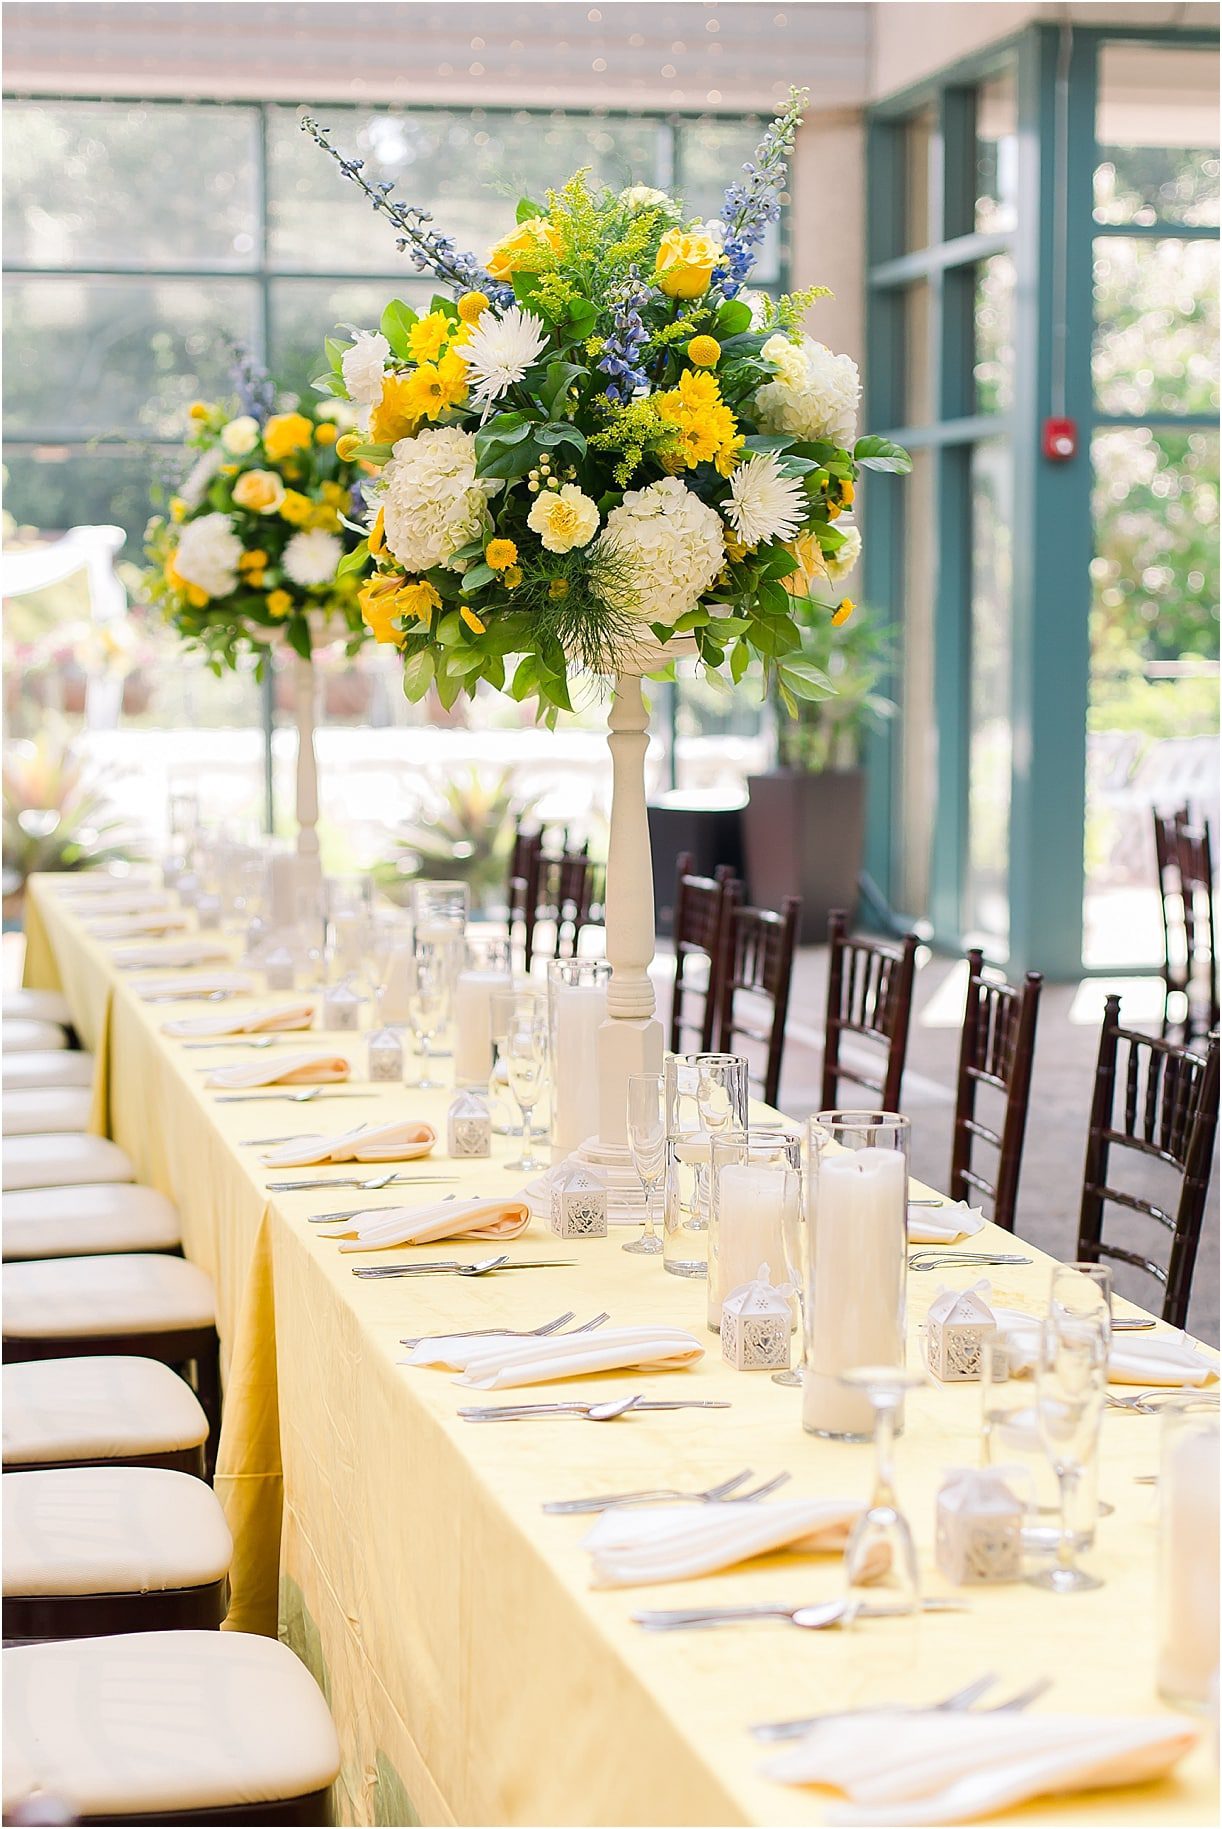 Light Blue and Yellow Wedding | Hill City Bride Wedding Blog Reception